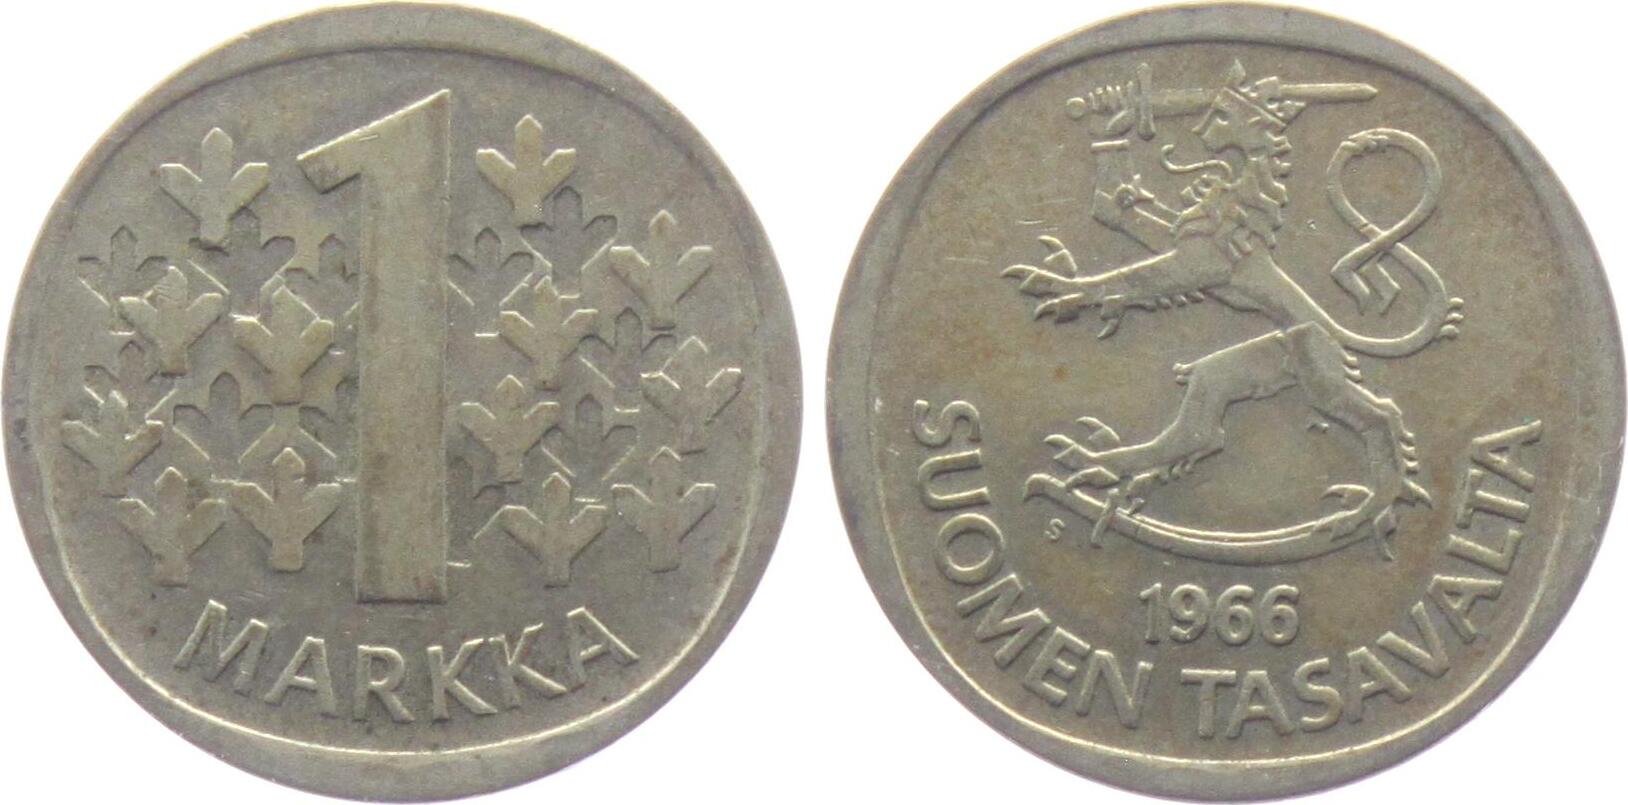 1 mark each. Финляндия 1 марка 1976. Suomen tasavalta монеты. 1 Финская марка. Финляндия 1 марка монета.